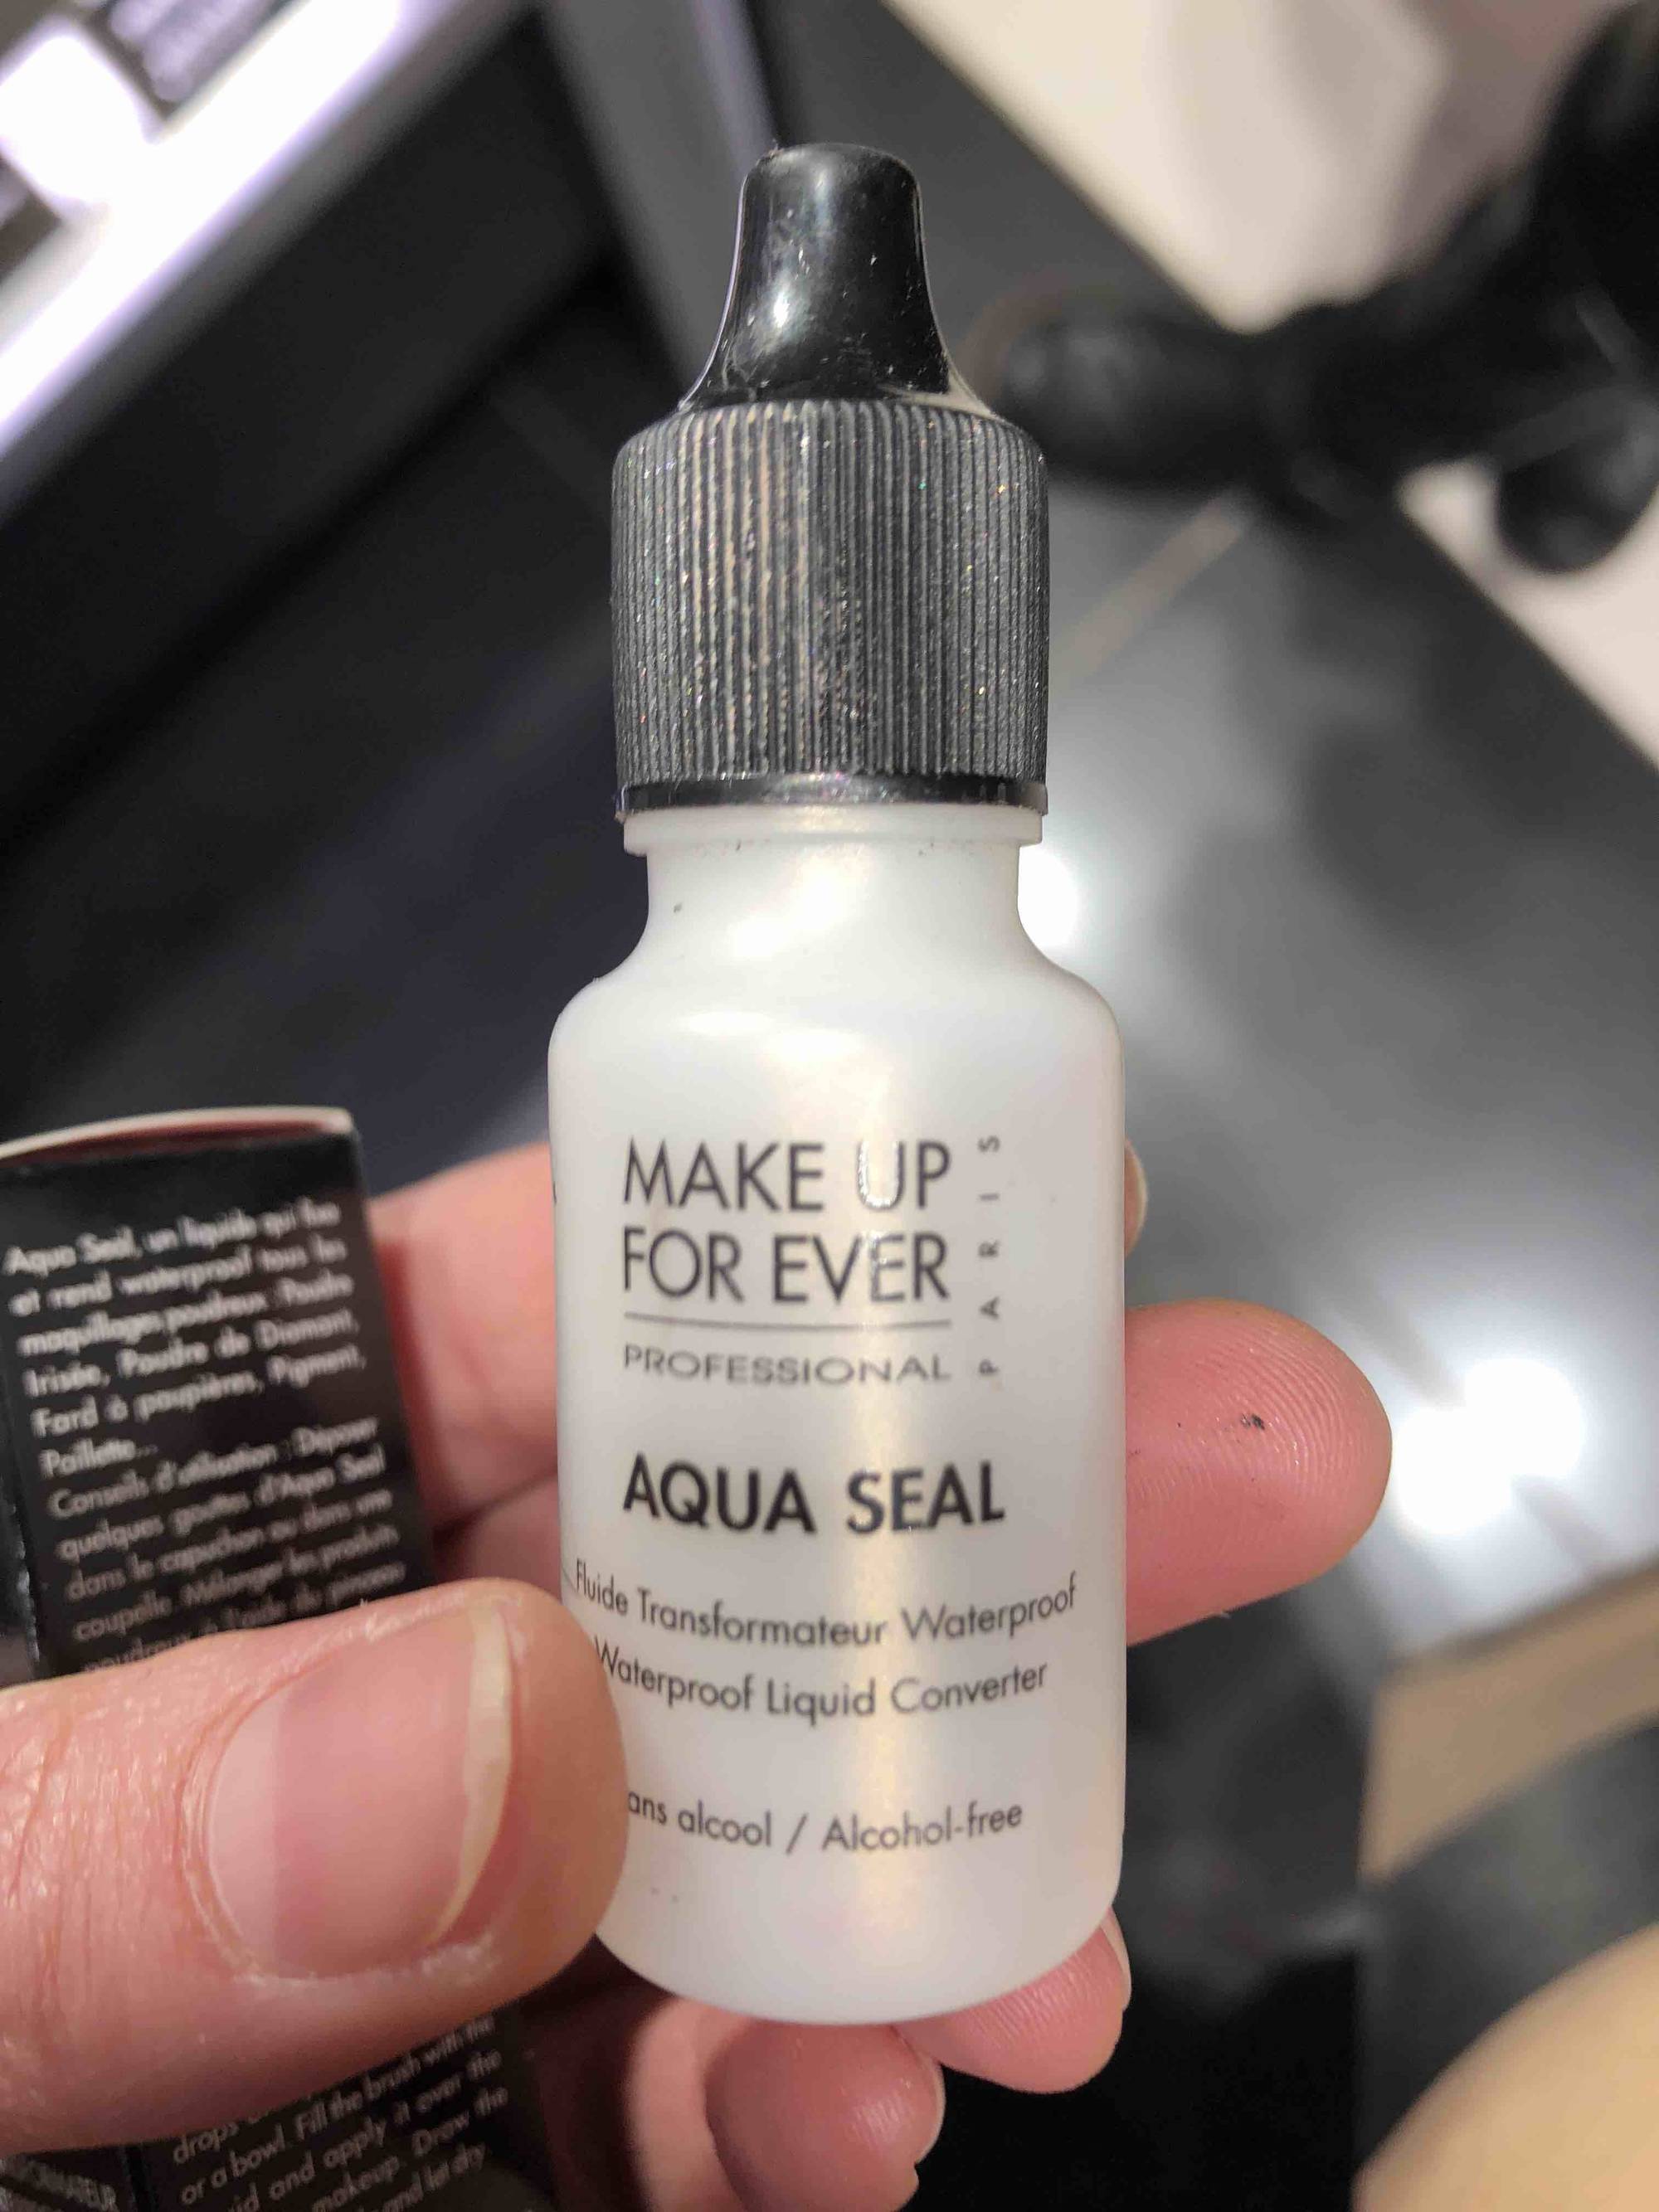 MAKE UP FOR EVER - Aqua Seal - Fluide transformateur waterproof